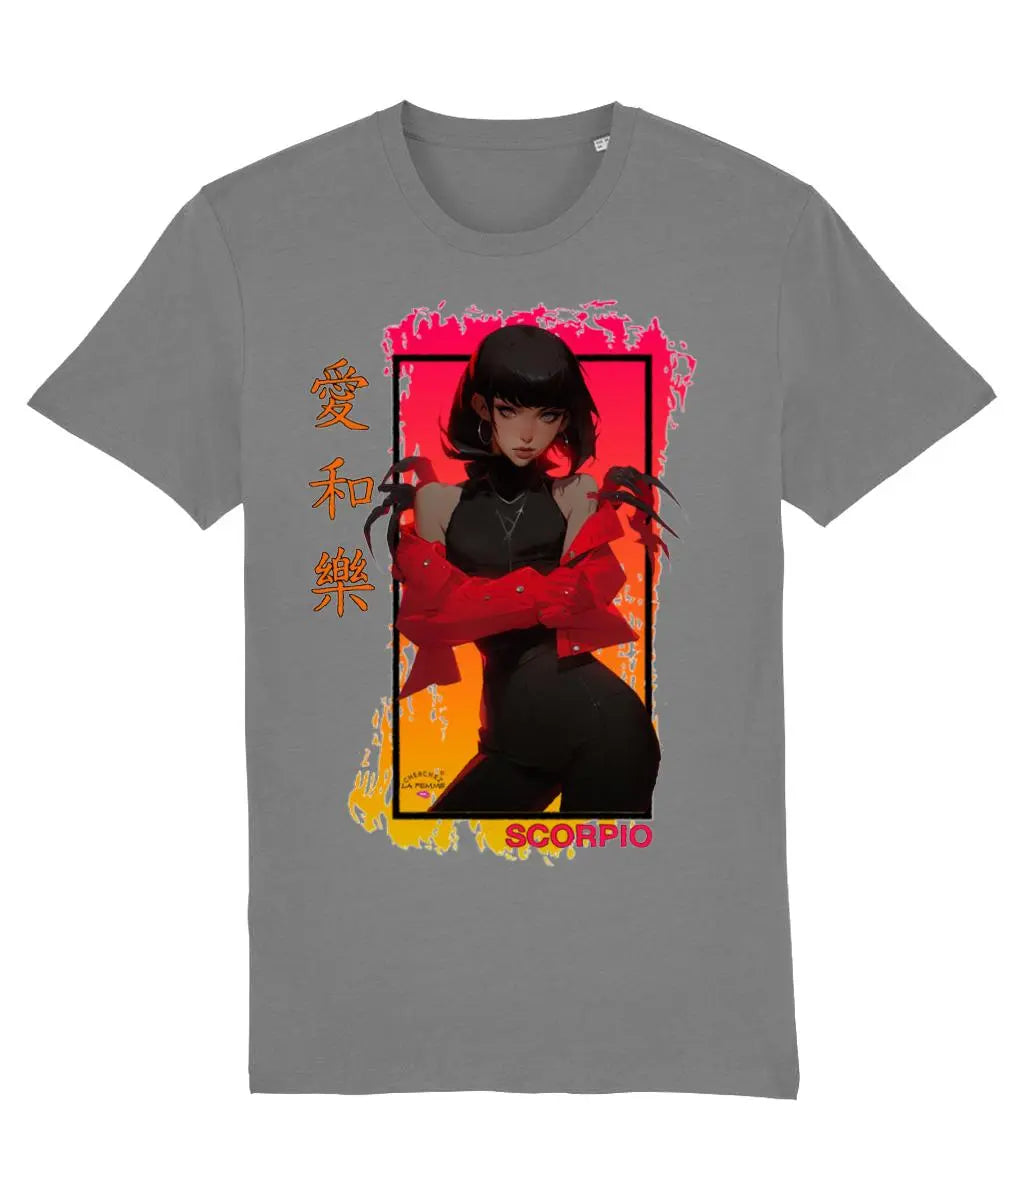 Scorpio Anime Inspired Organic T-shirt Cherchez La Femme brand